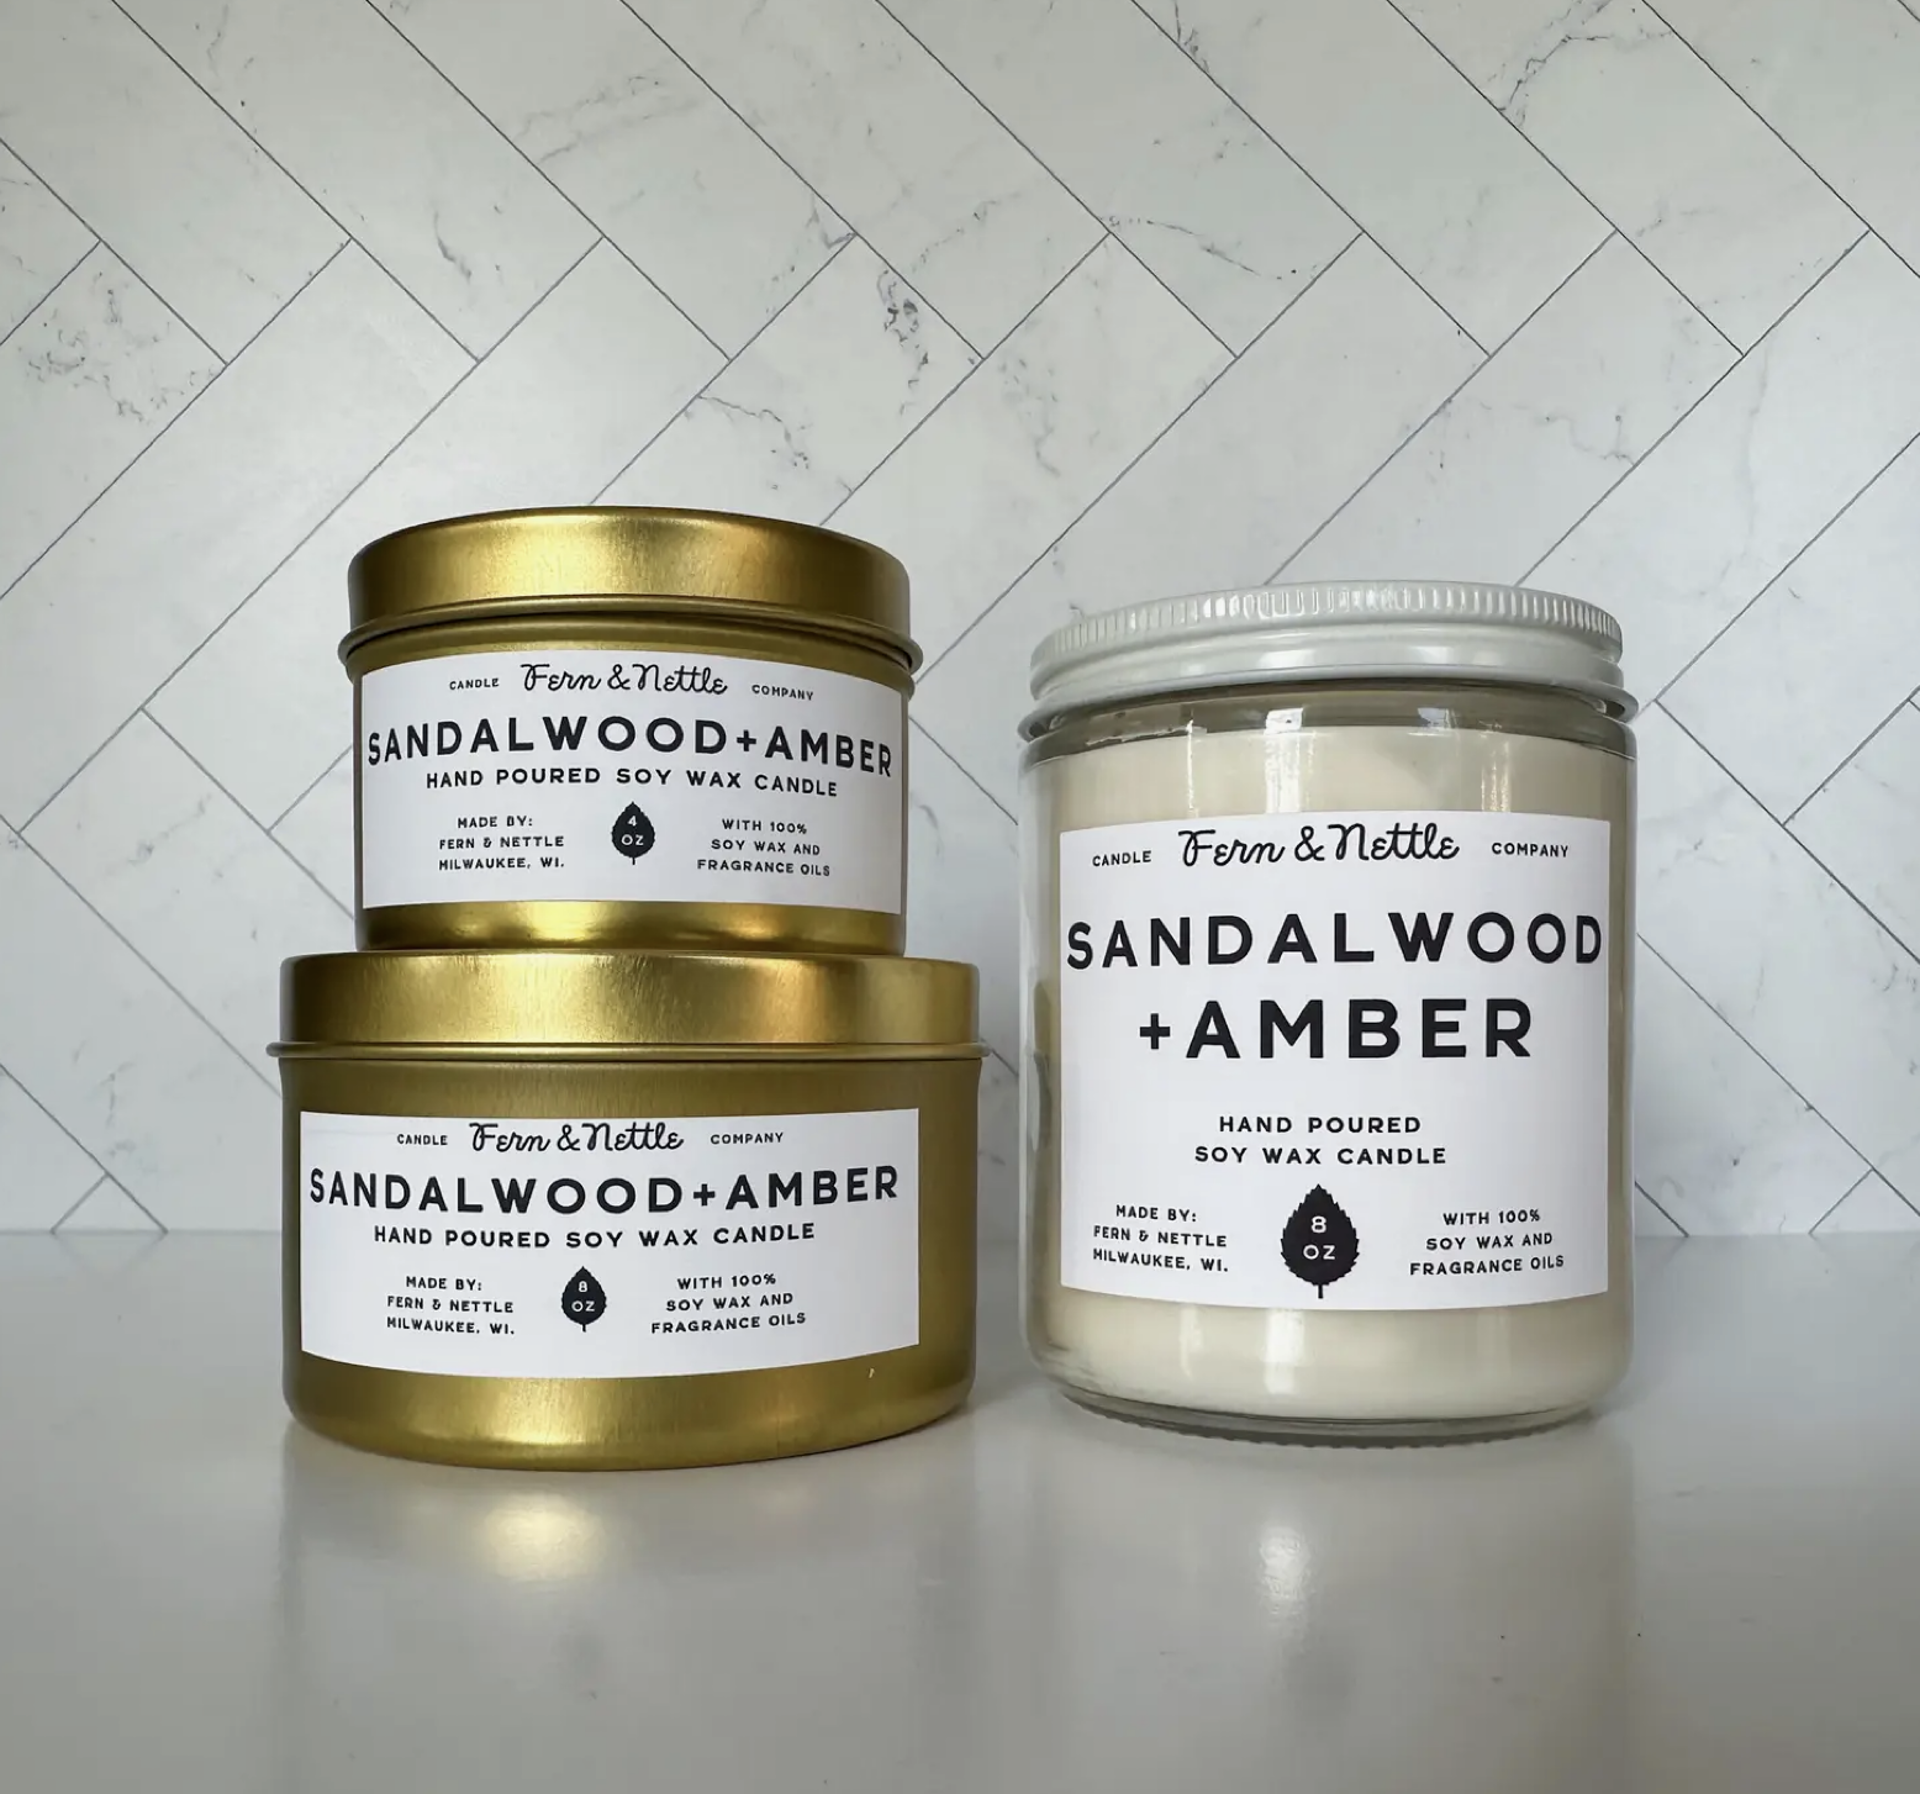 8 oz. Sandalwood + Amber Soy Wax Candle by Fern & Nettle